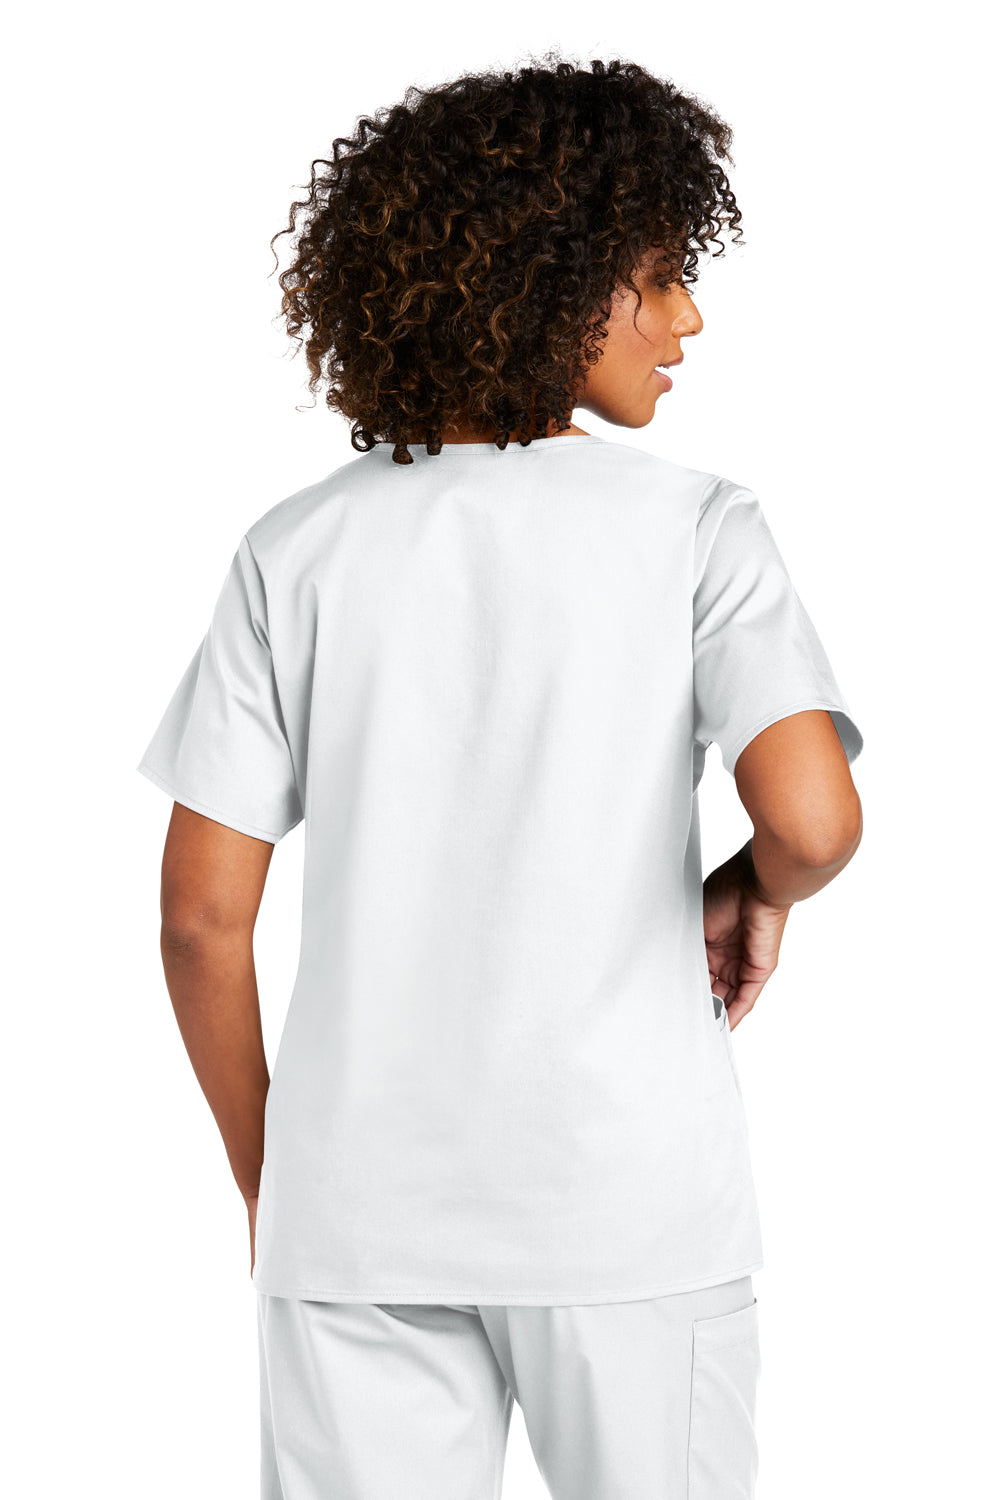 Wonderwink WW4760 WorkFlex Short Sleeve V-Neck Mock Wrap Shirt White Back